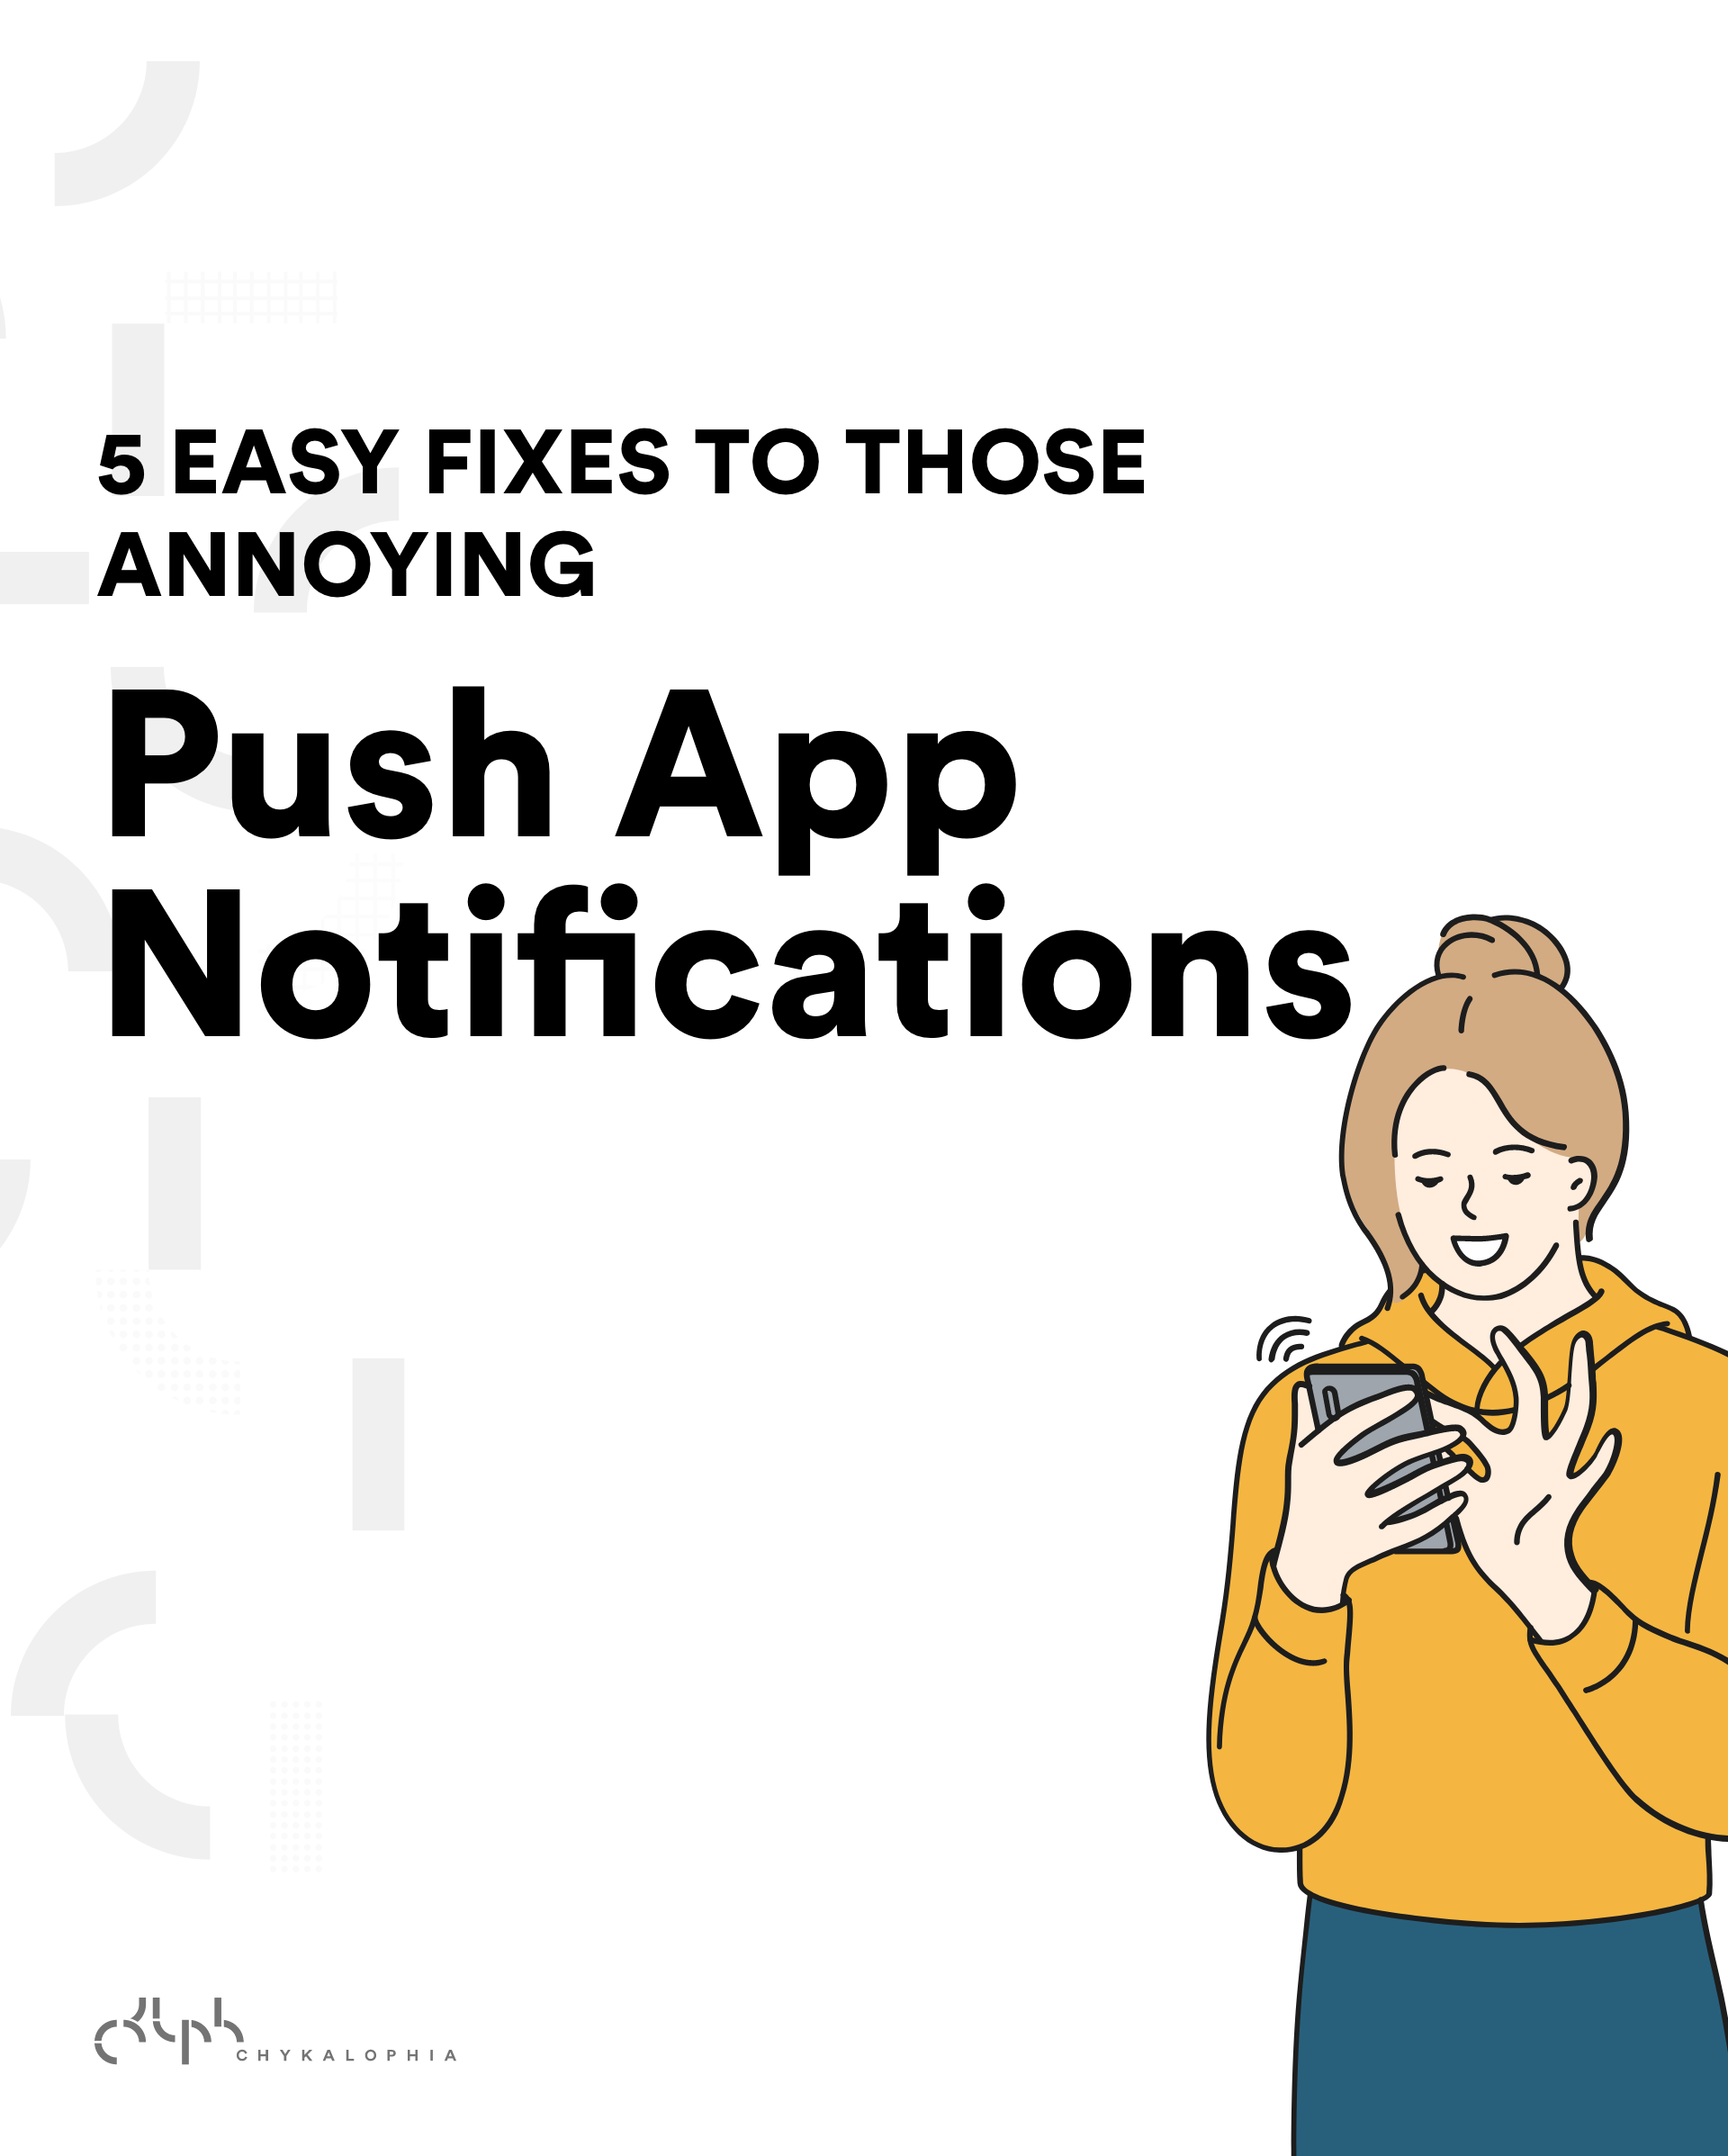 Tips to Avoid Sending Annoying Push Notifications